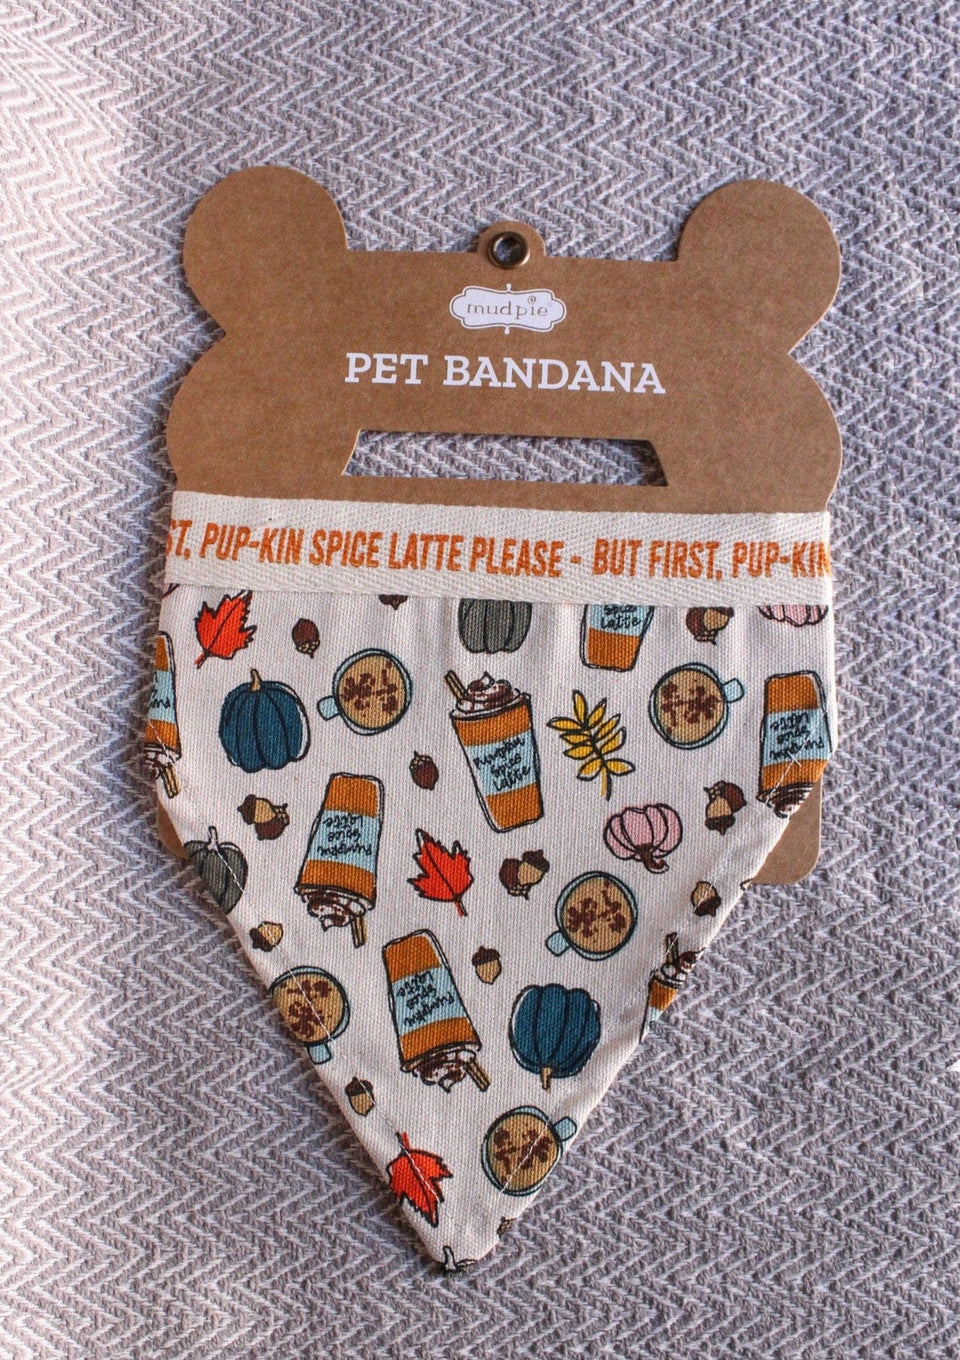 Pet Bandana Holiday Theme by Mud Pie Mud Pie Pet Pumpkin Spice Latte